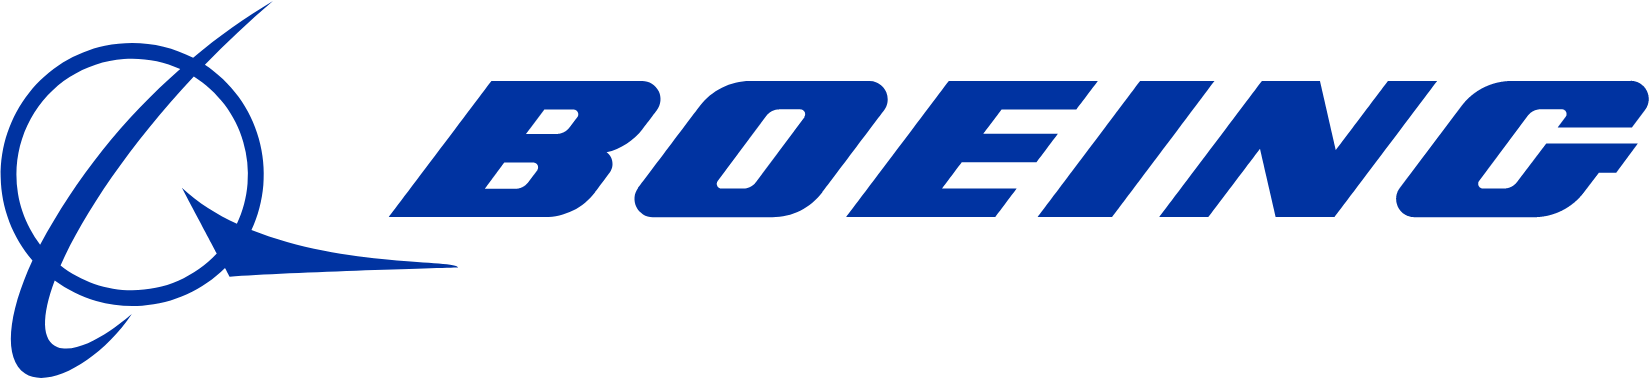 Boeing logo large (transparent PNG)